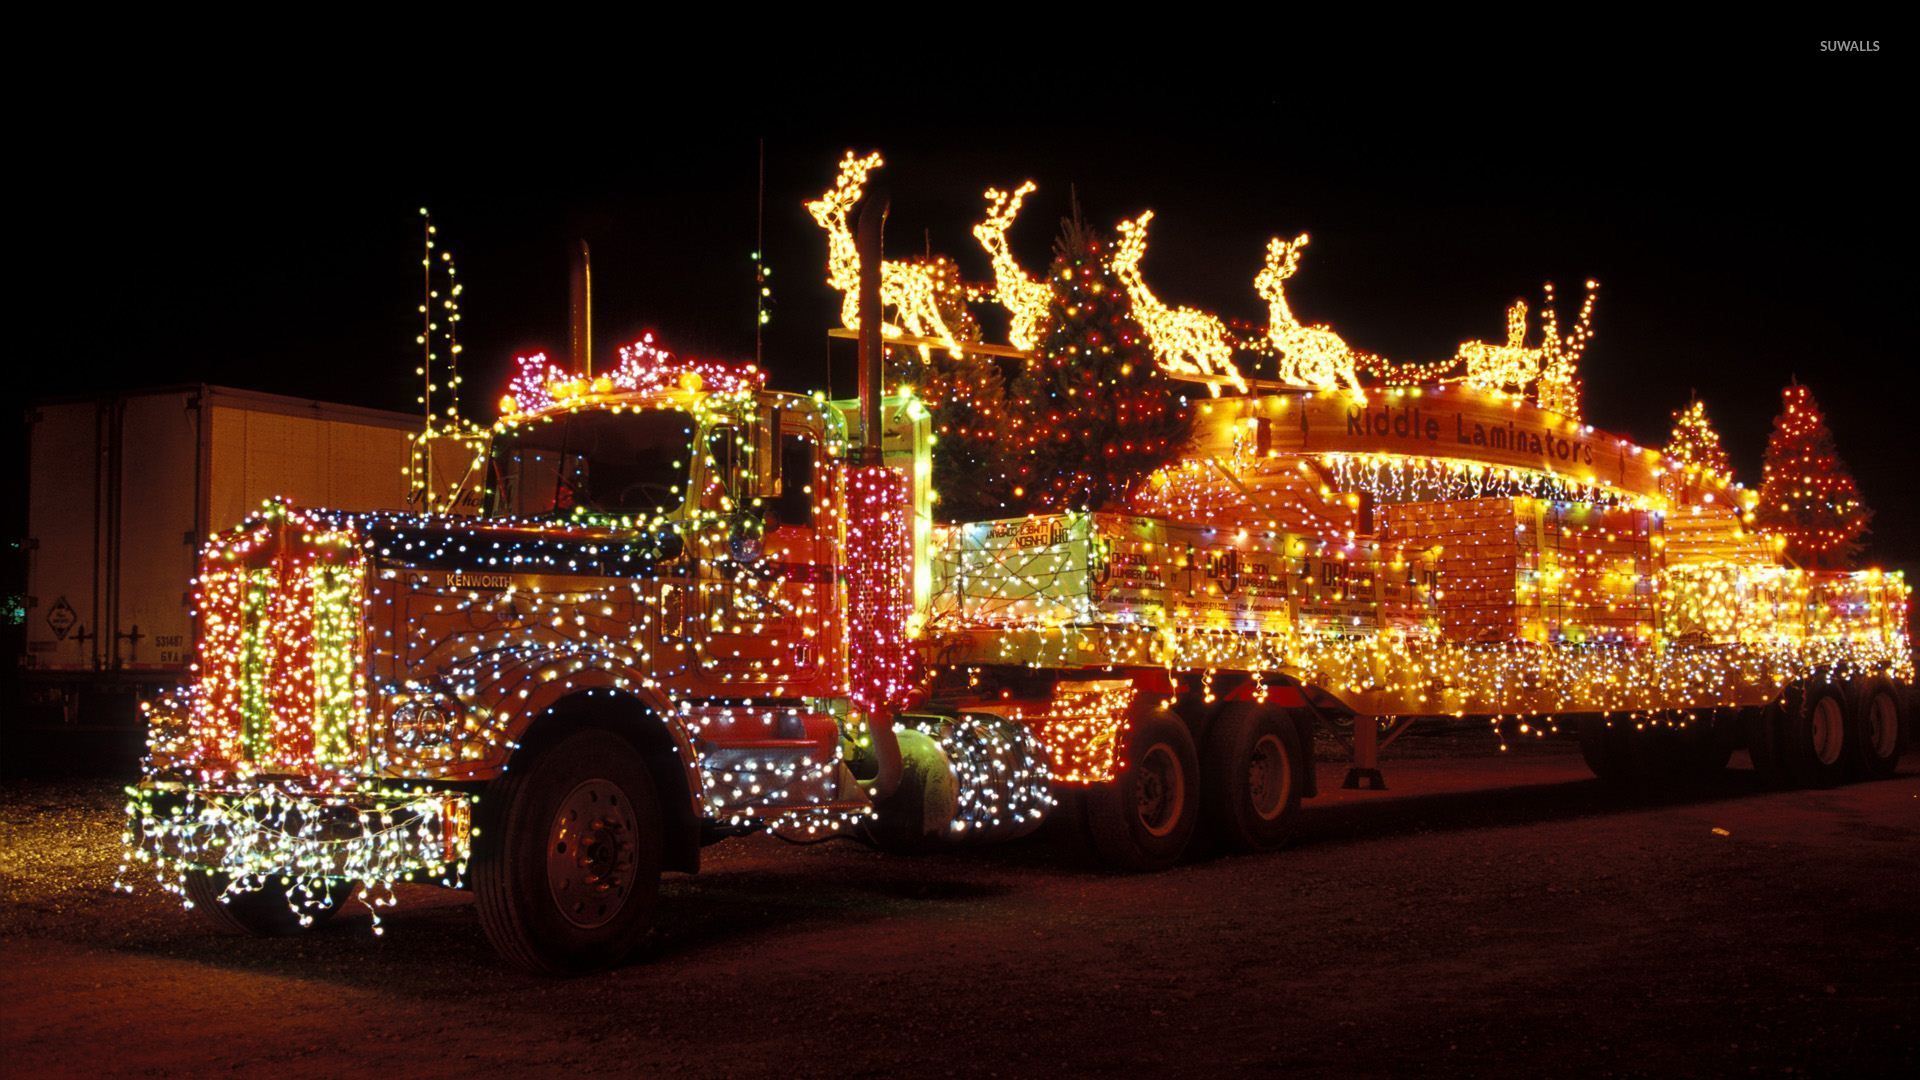 Truck with Christmas lights wallpaper wallpaper